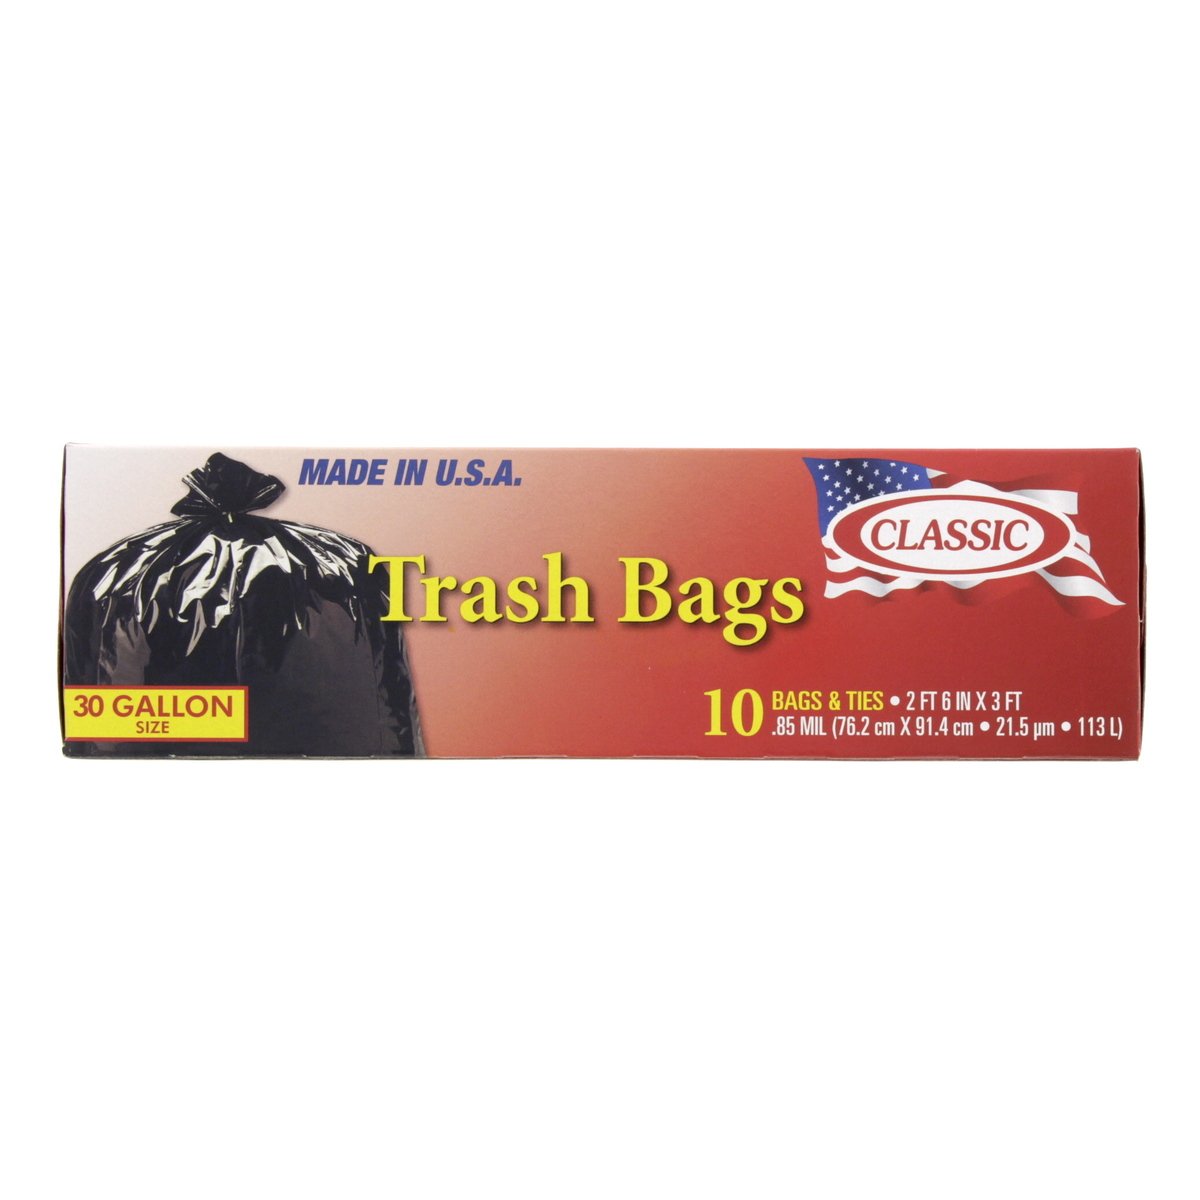 Classic Trash Bags 30Gallon 10pcs